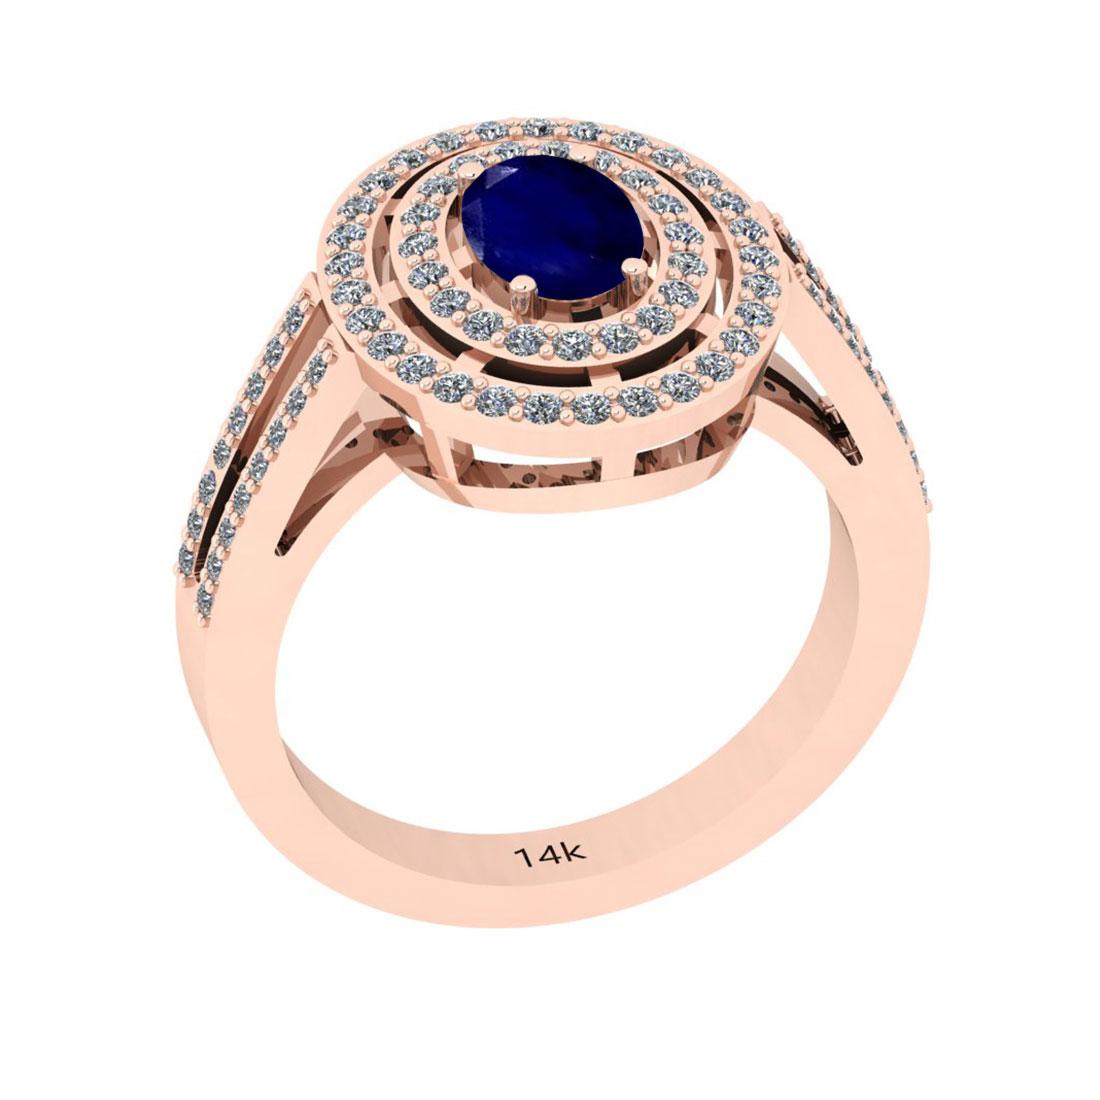 1.24 Ctw I2/I3 Blue Sapphire And Diamond 14k White Gold Ring